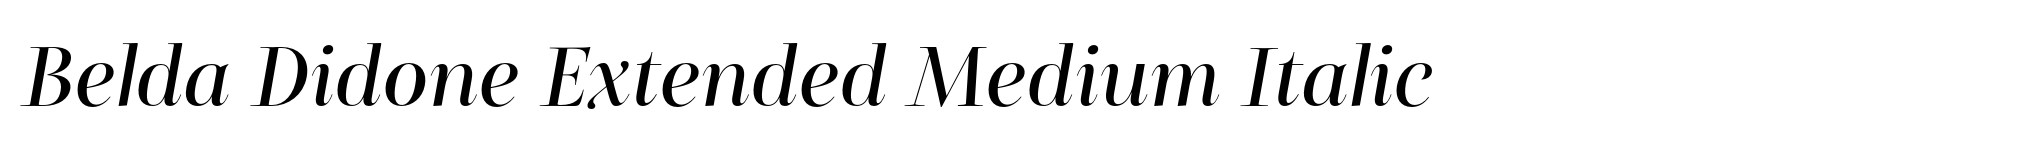 Belda Didone Extended Medium Italic image